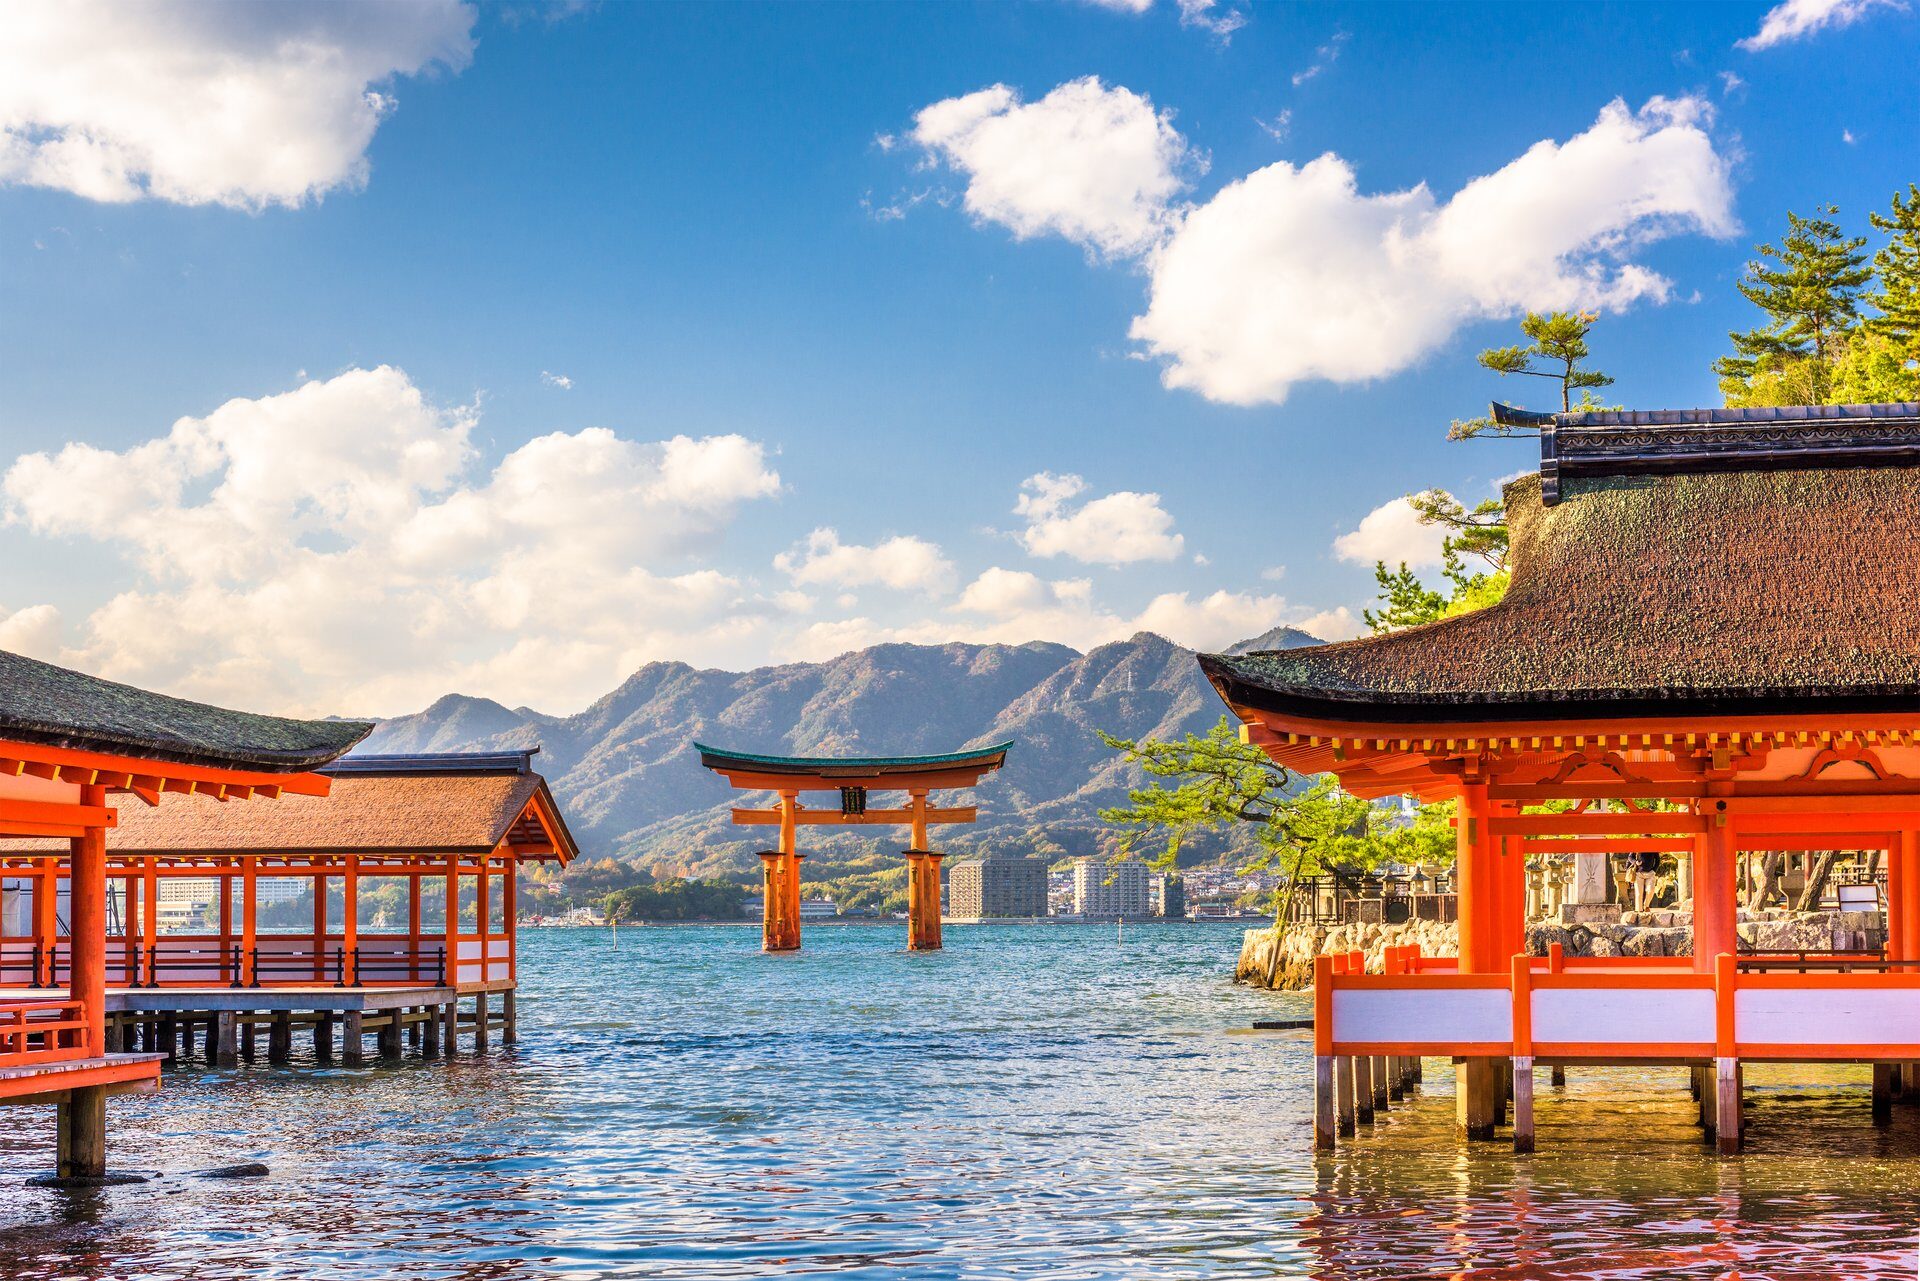 The Treetop Temple Protects Kyoto  Nature desktop, Nature desktop